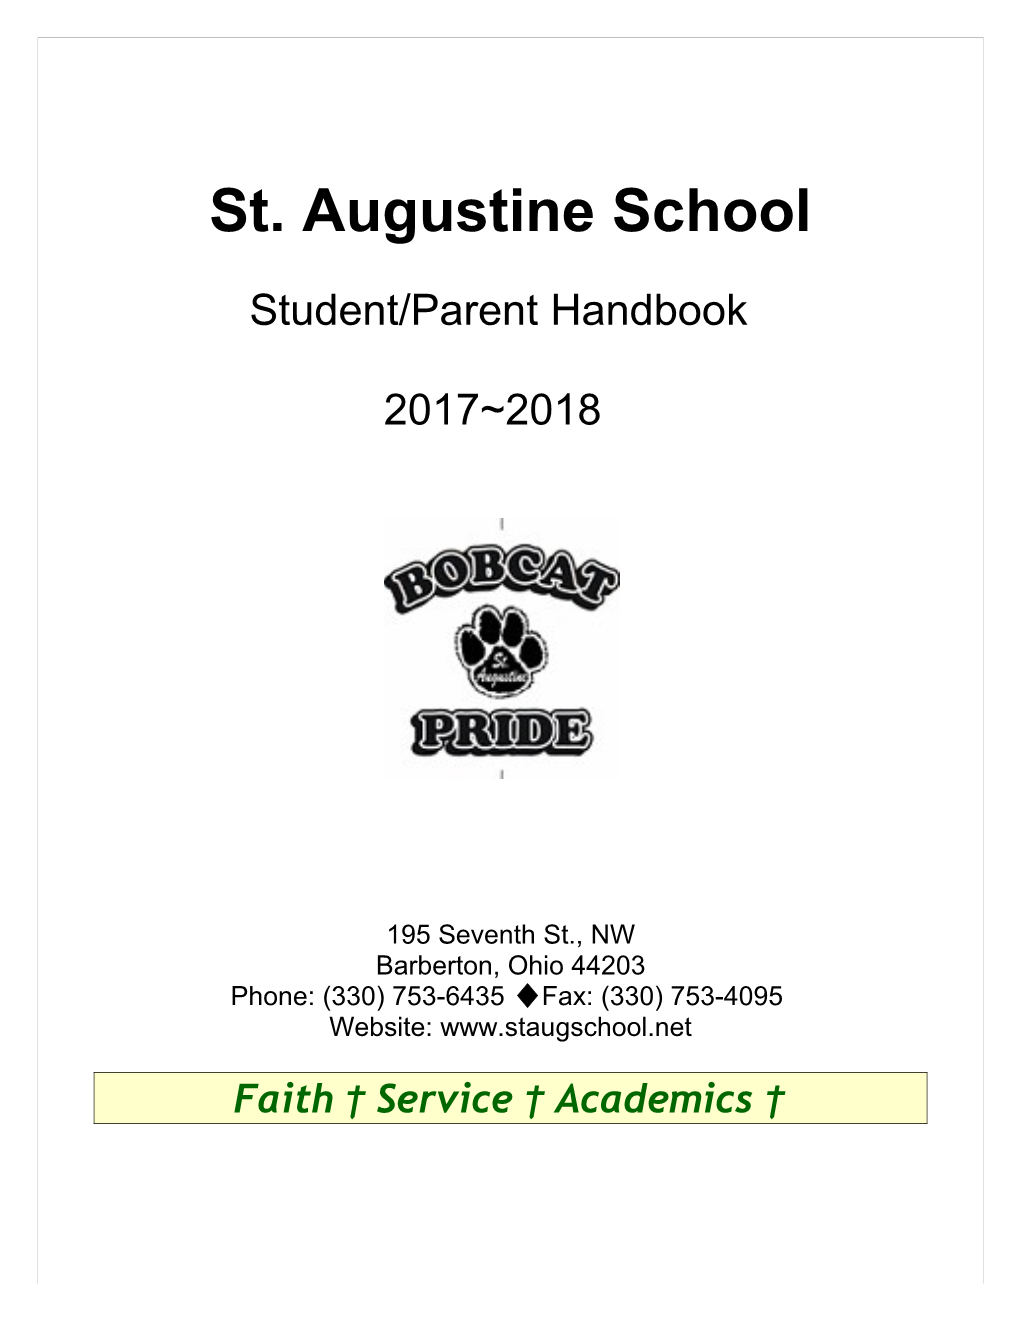 Student/Parent Handbook s2